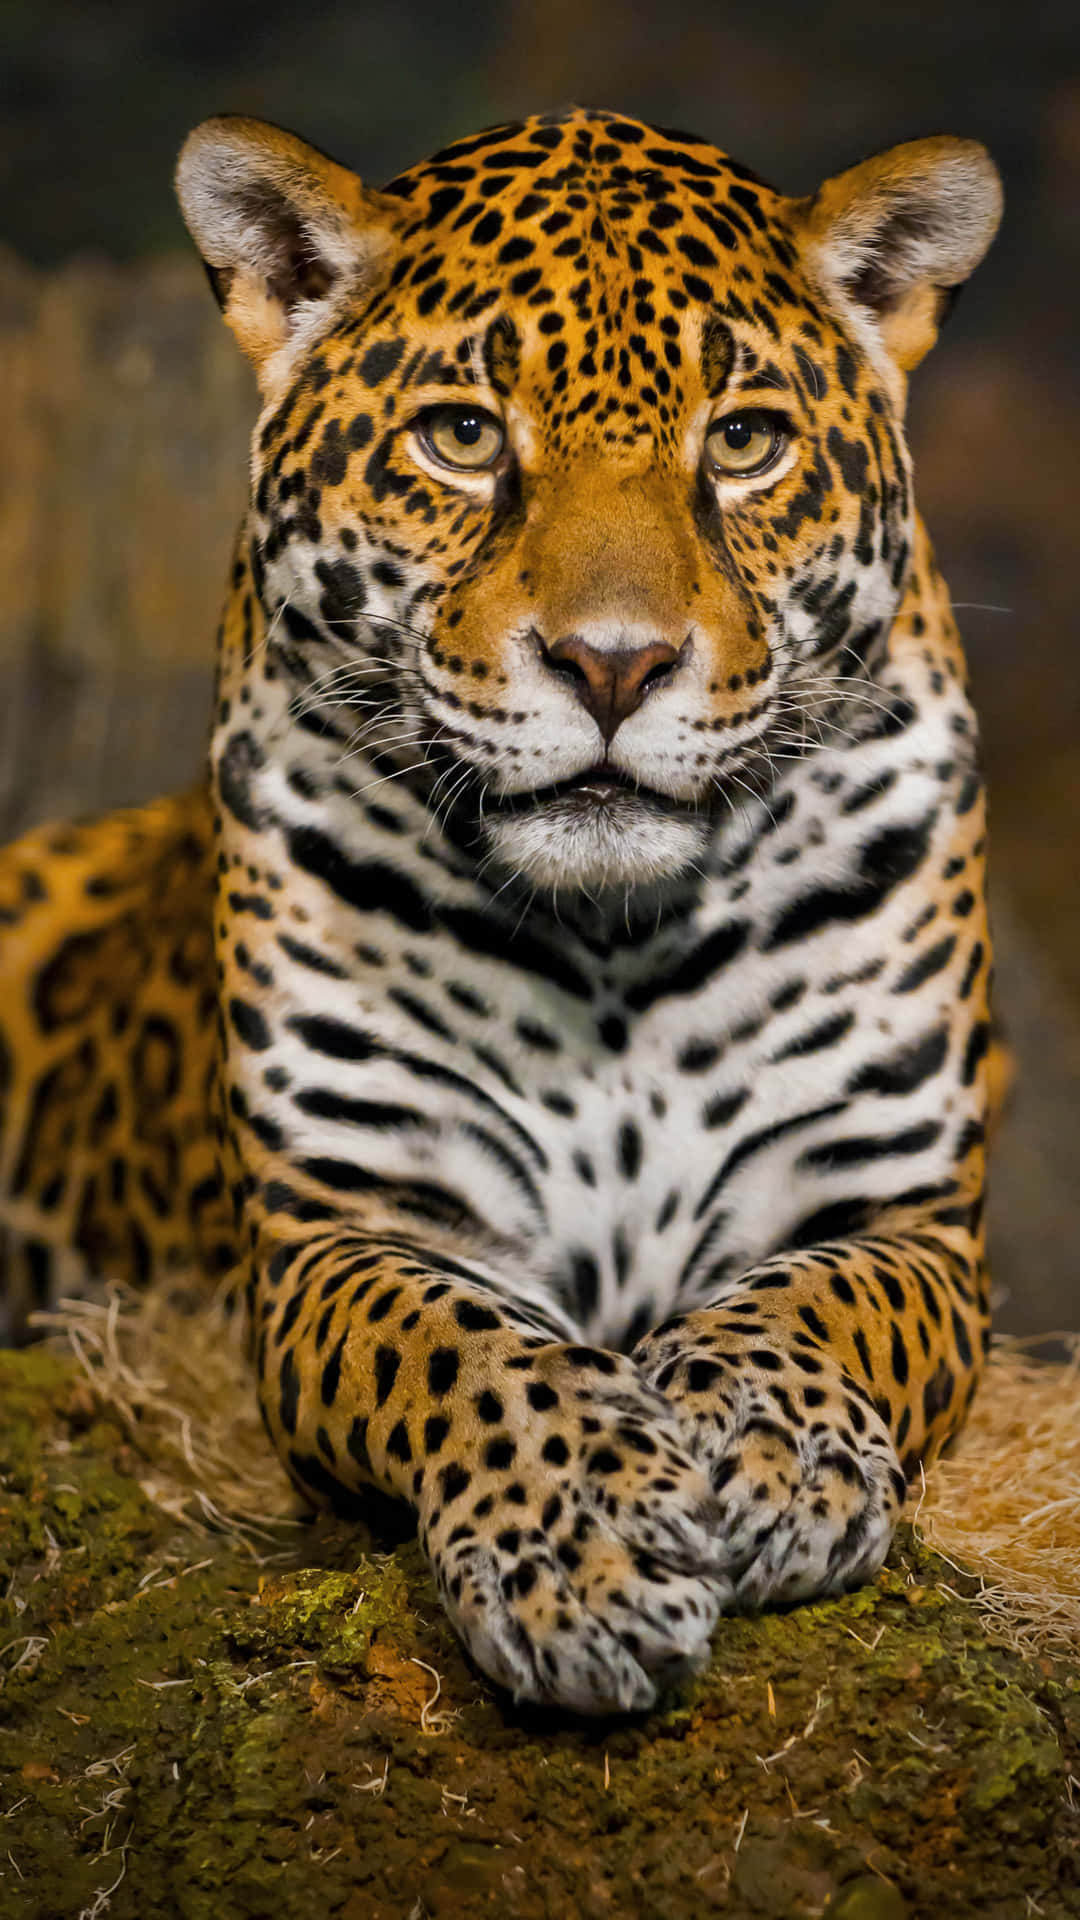 Majestætiskleopard I Sit Naturlige Miljø.